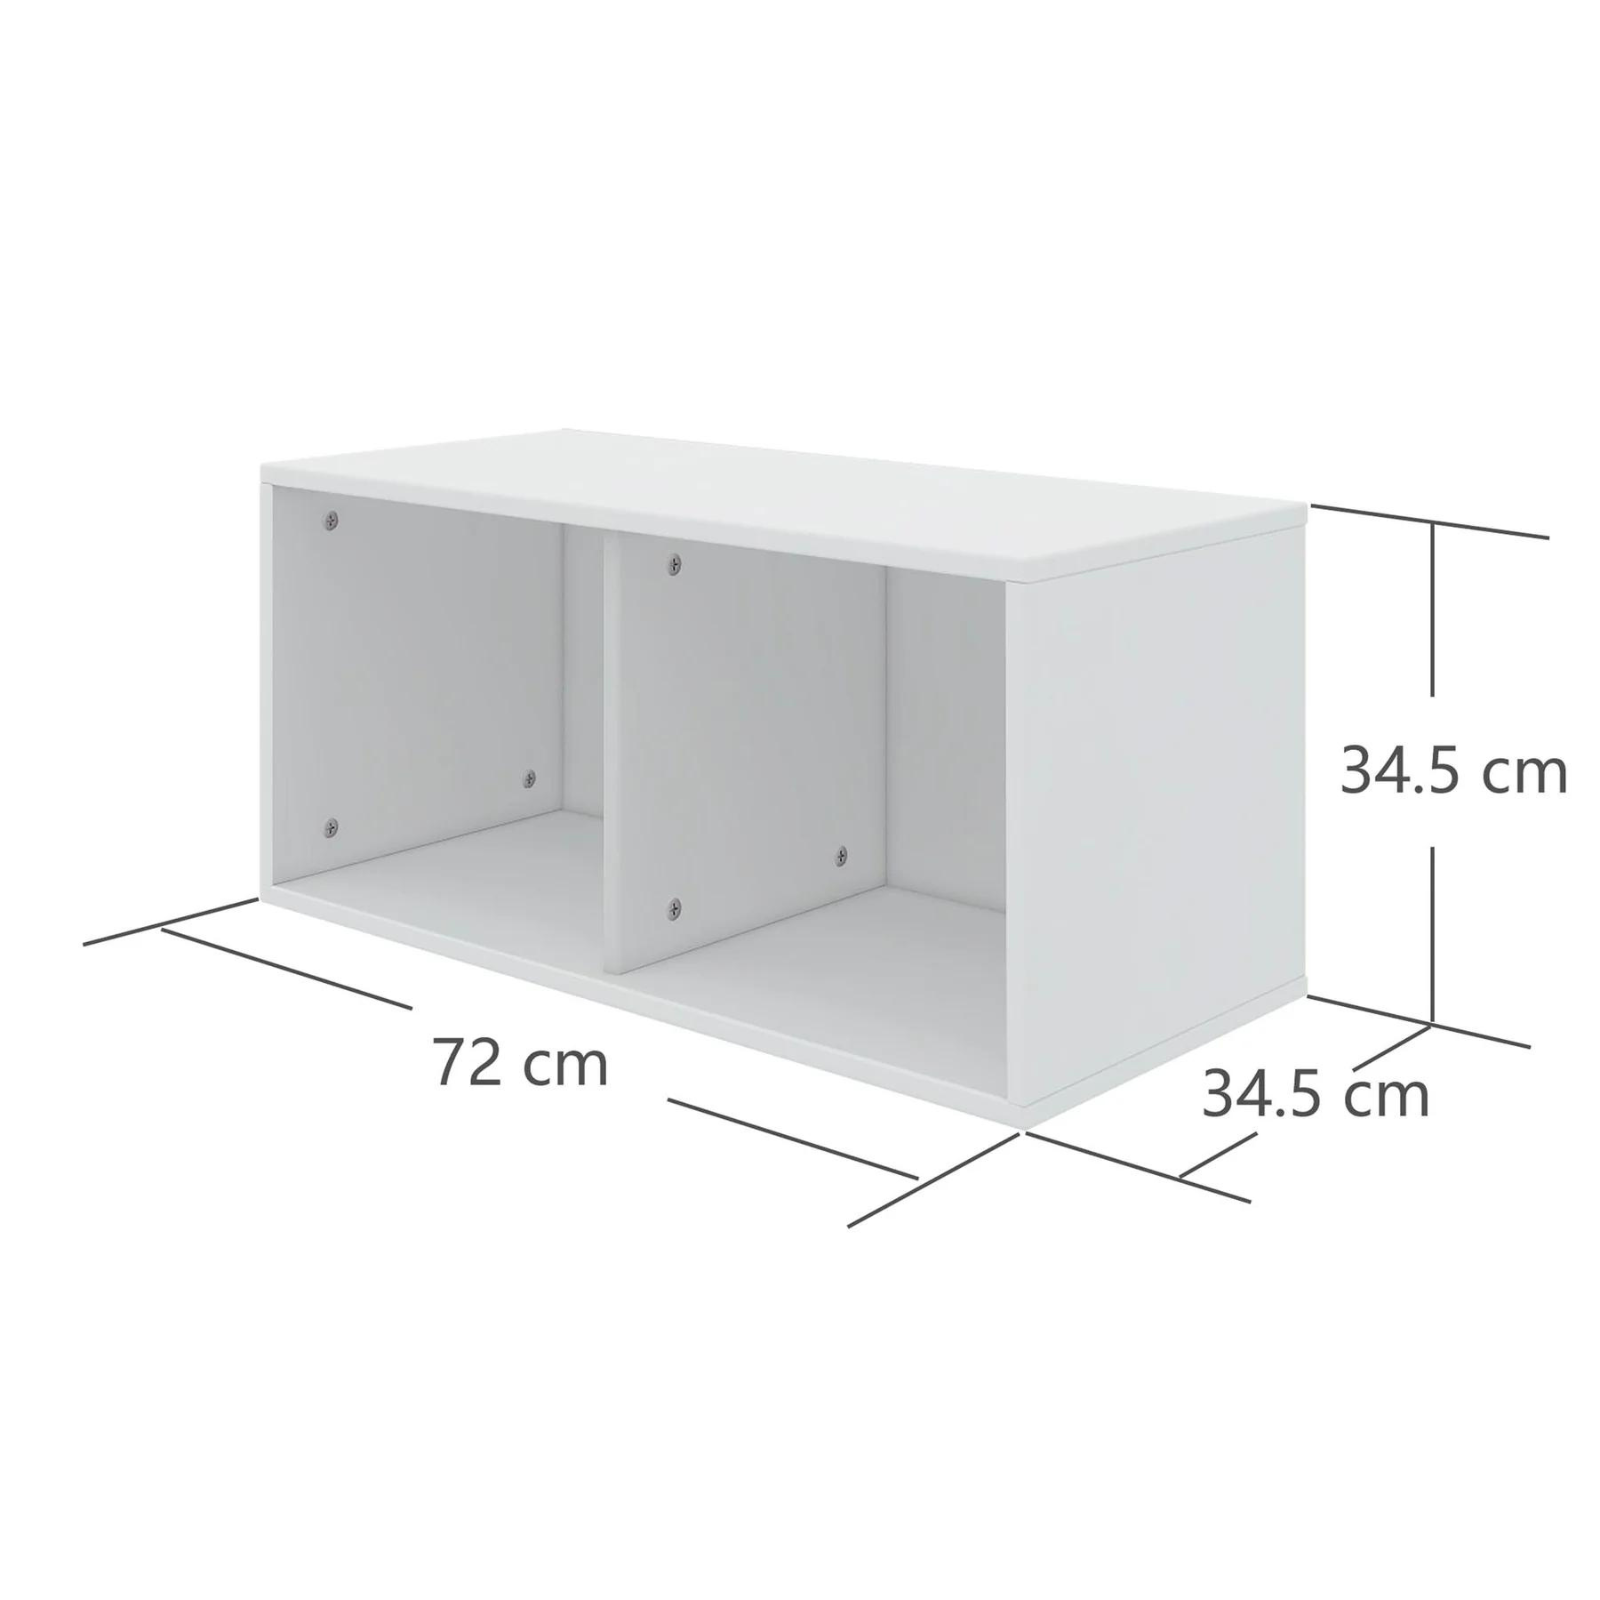 FELXA Bookcase dimensions